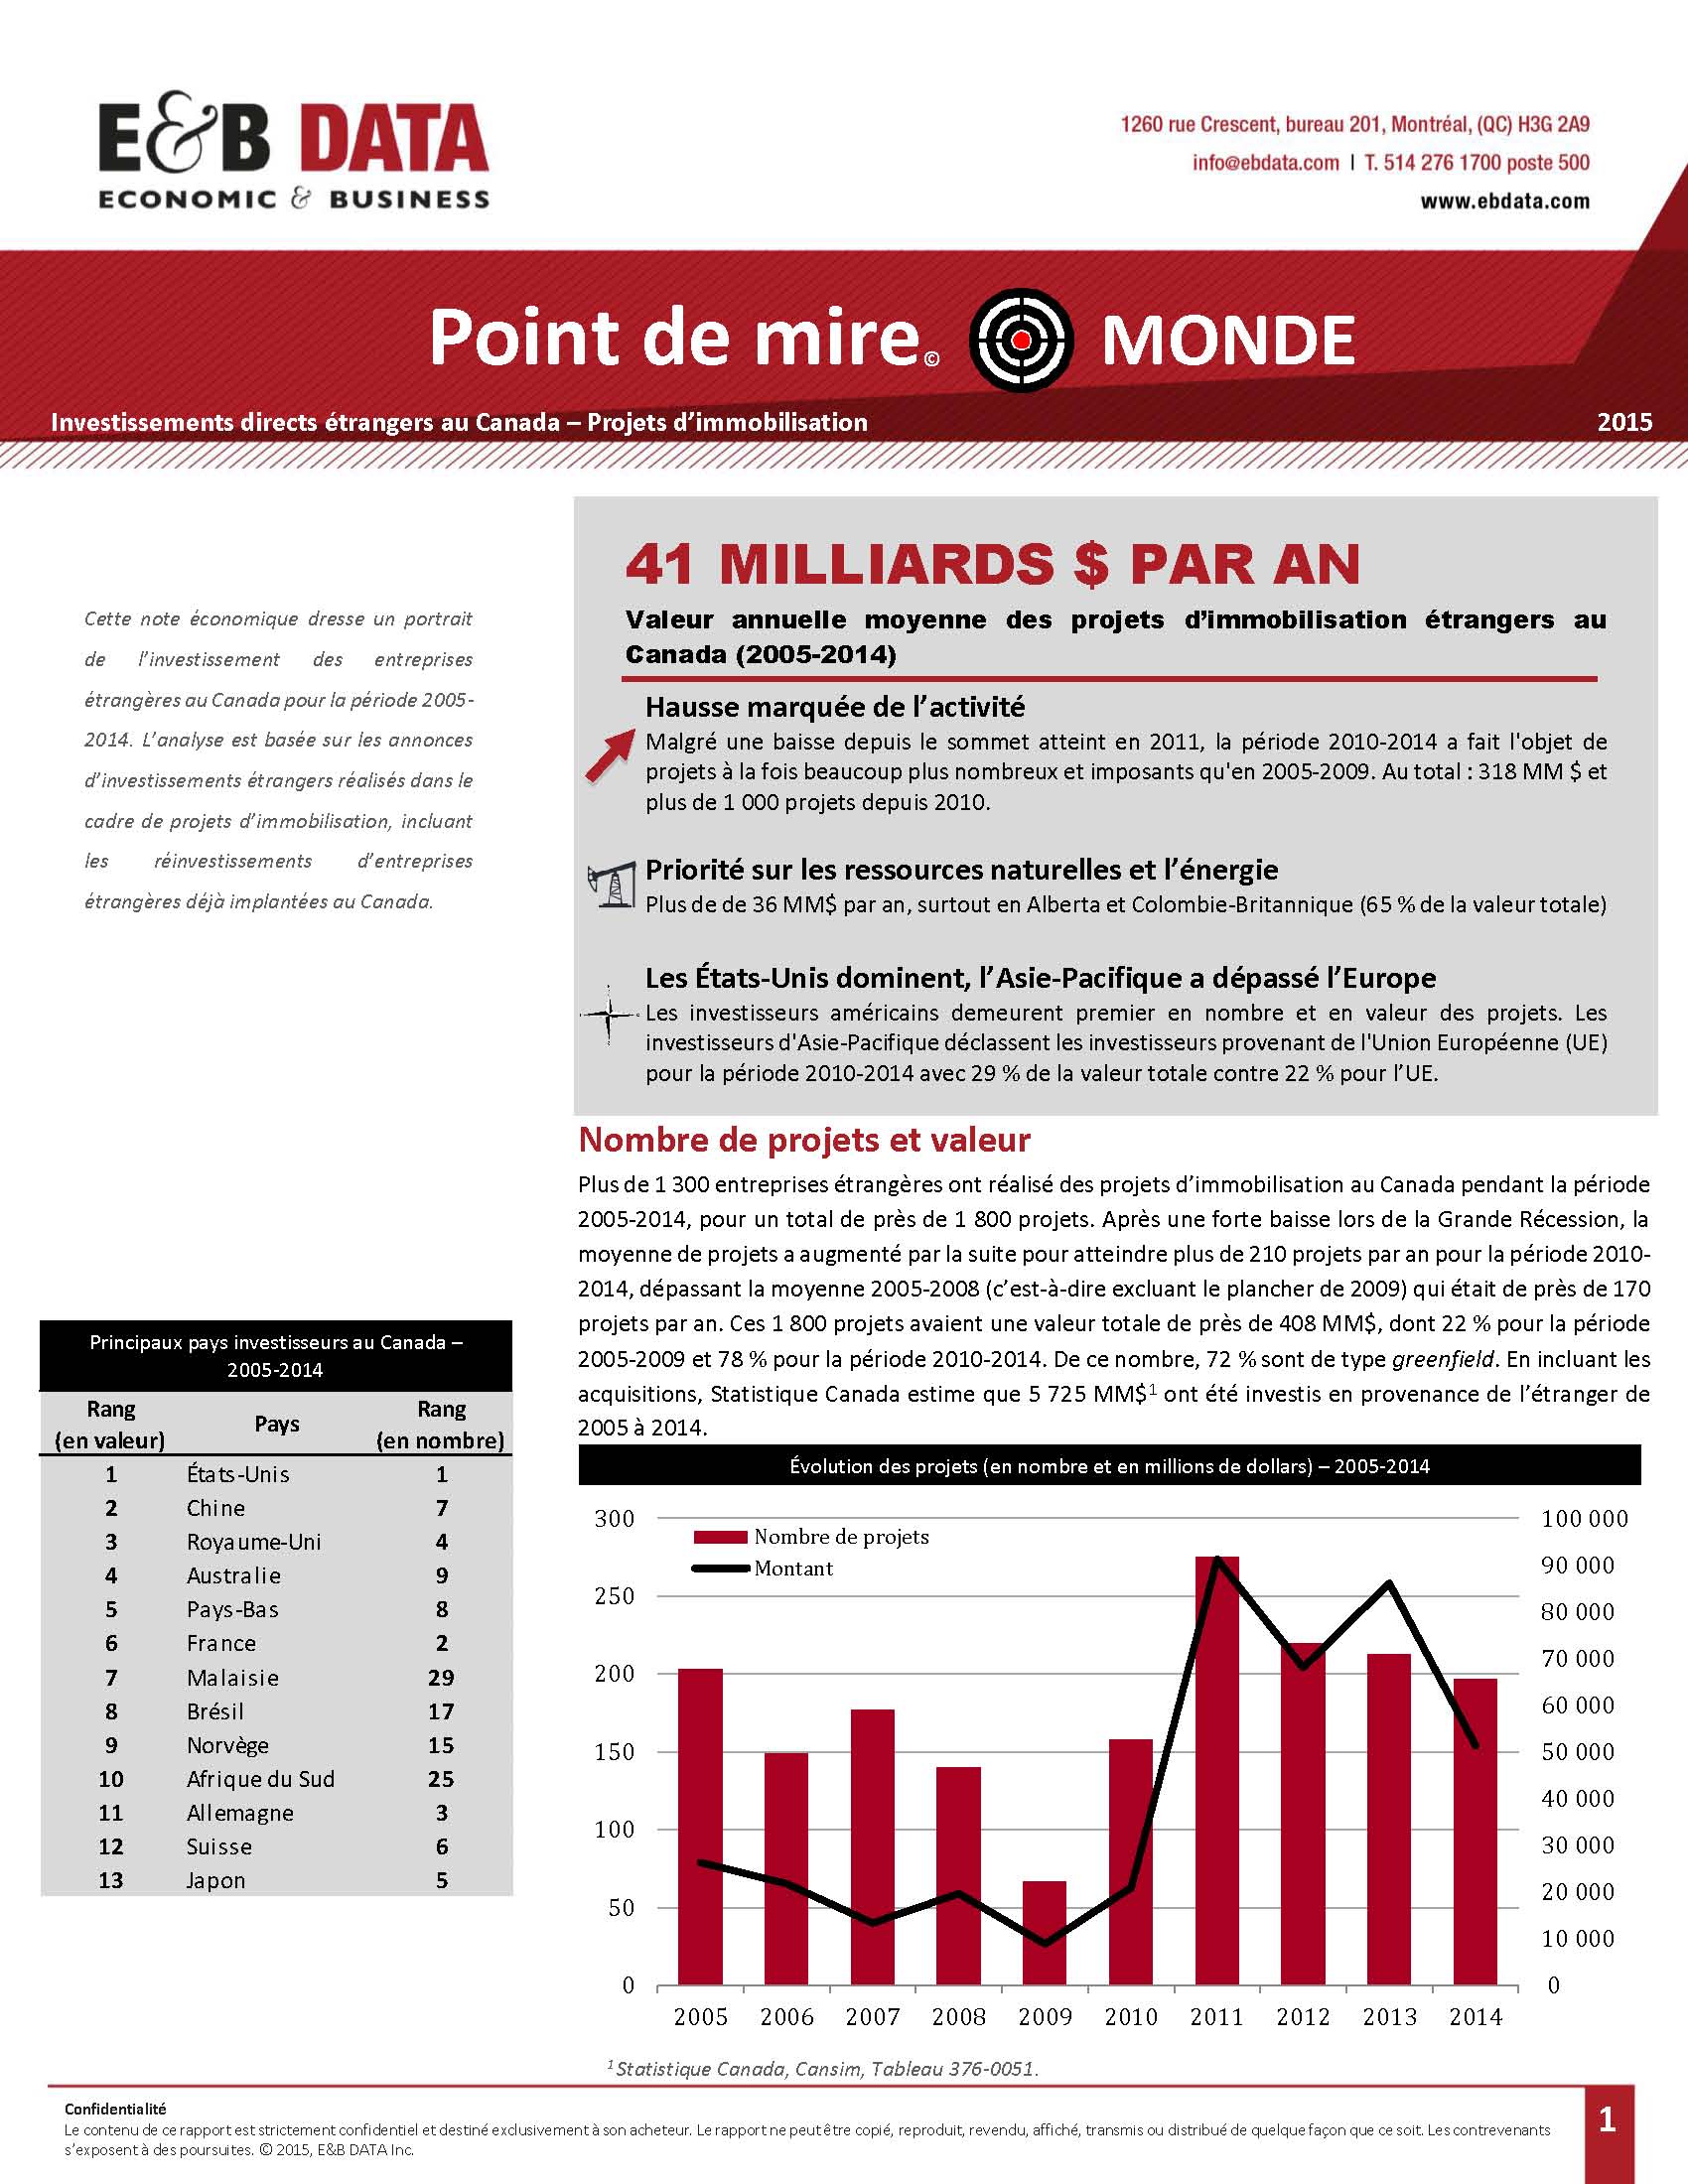 Point de mire - Monde_Page_1